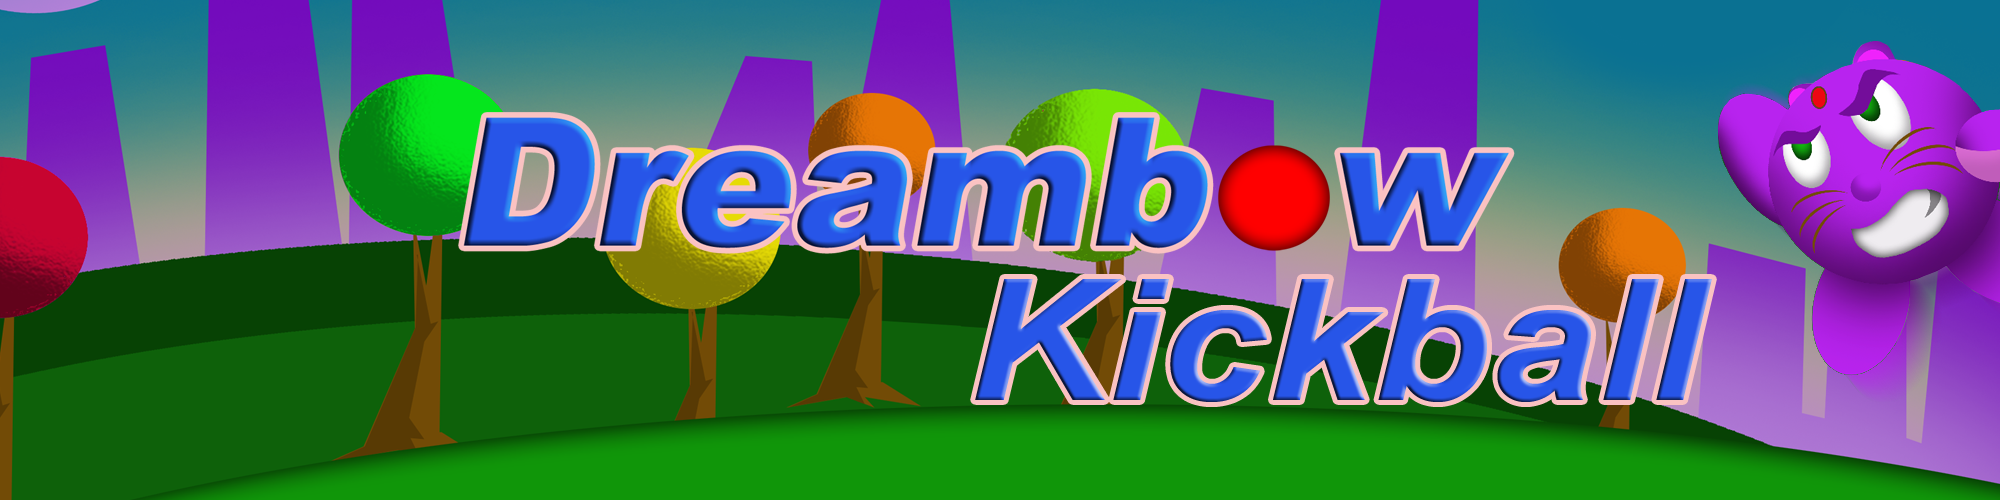 Dreambow Kickball